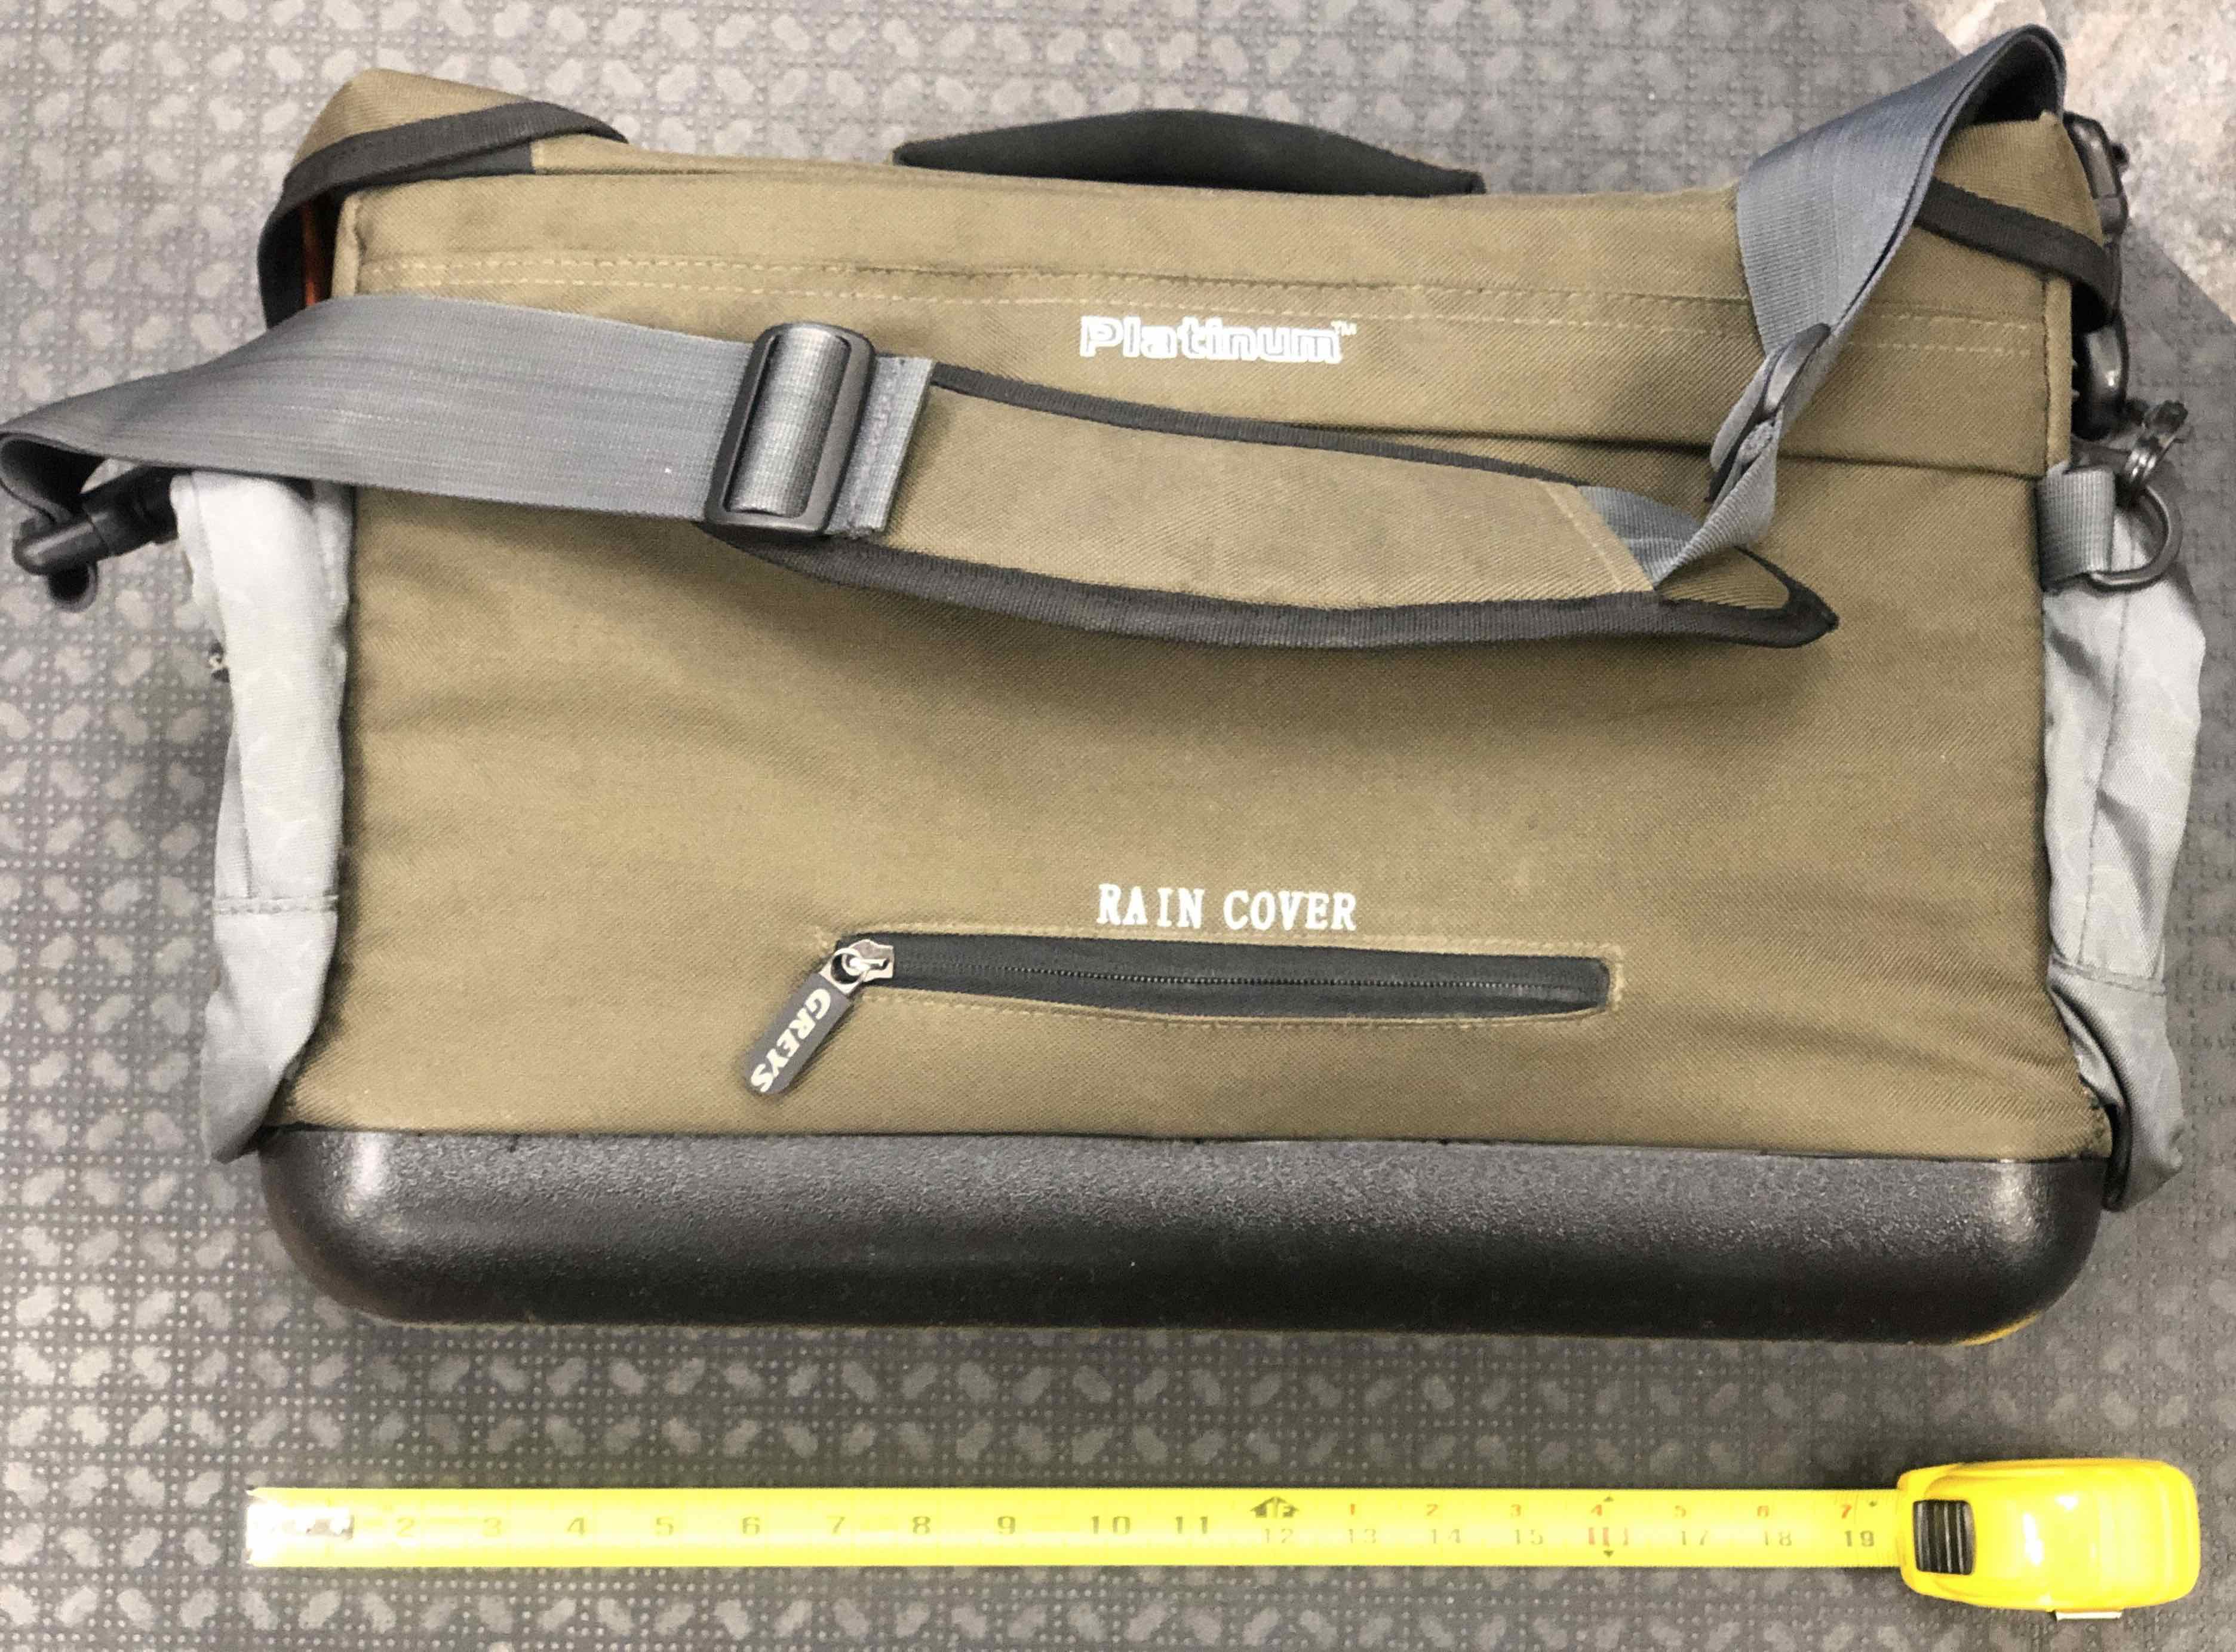 Greys Platinum Gear Tackle Bag - EXCELLENT CONDITION! - $75